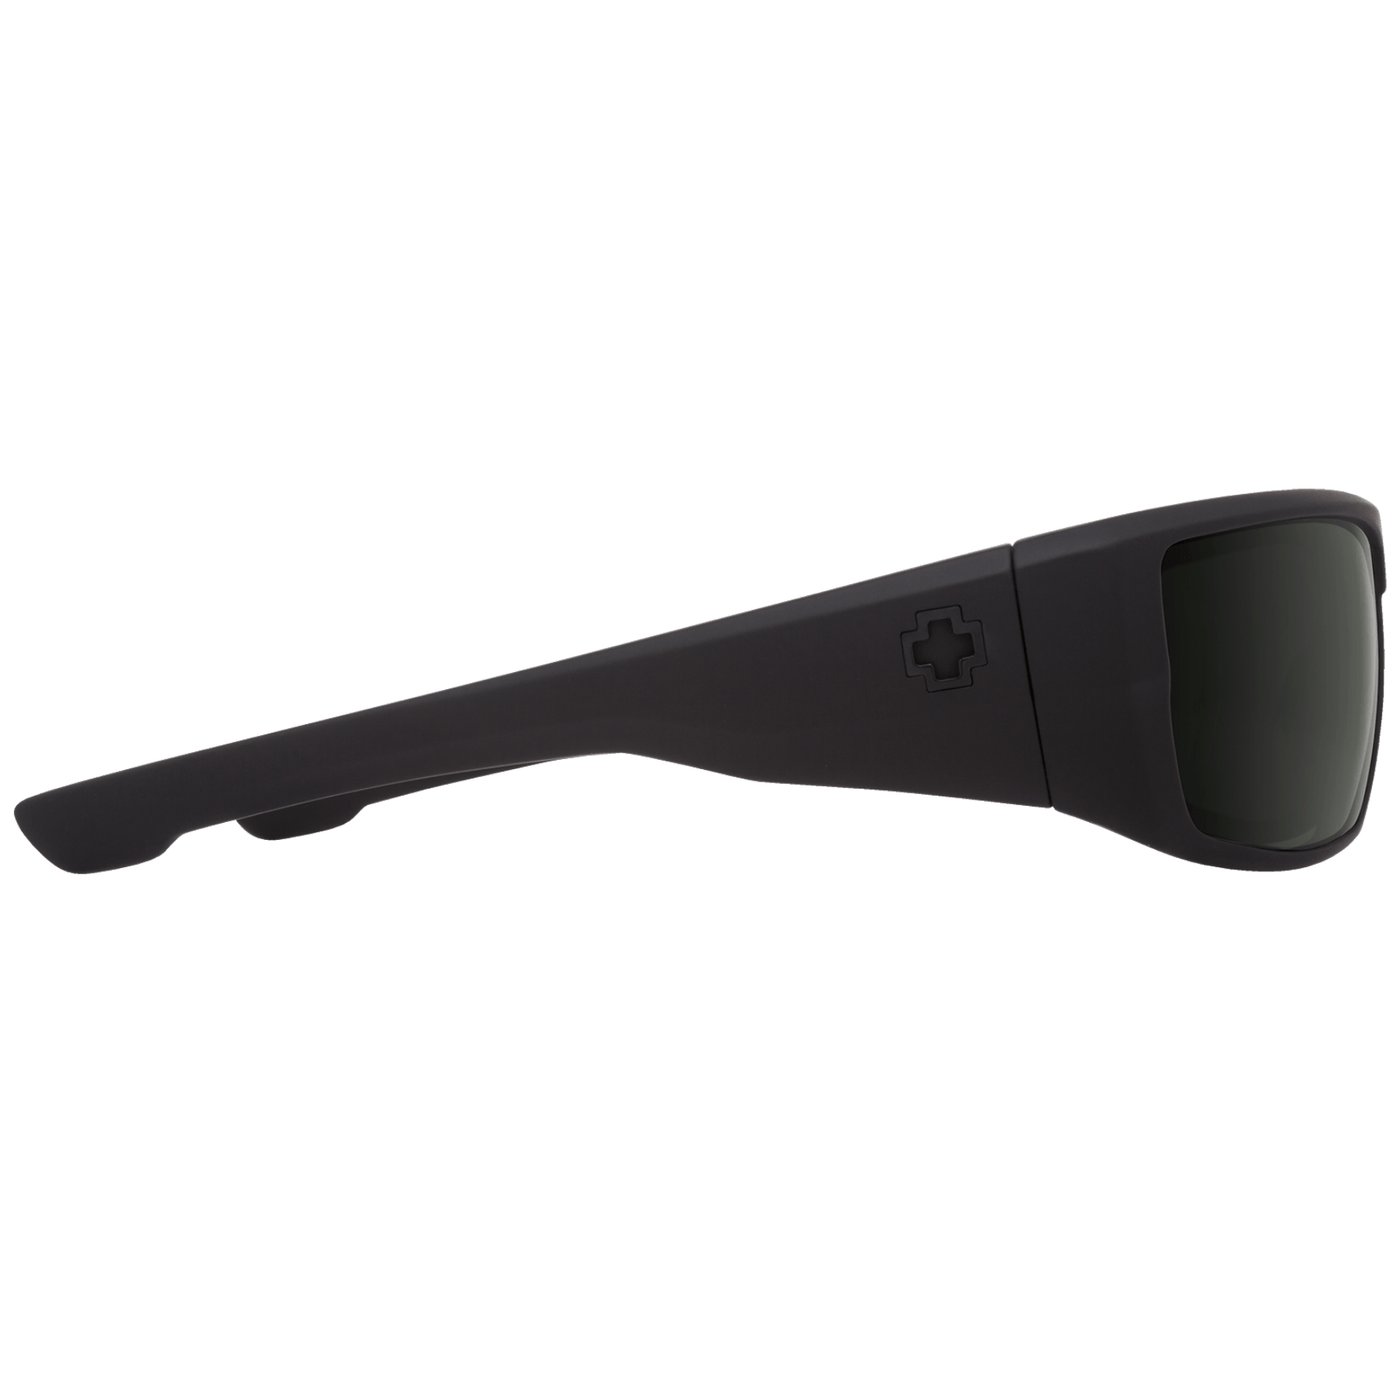 SPY DIRK Polarized Sunglasses, Happy Lens - Soft Matte Black 8Lines Shop - Fast Shipping